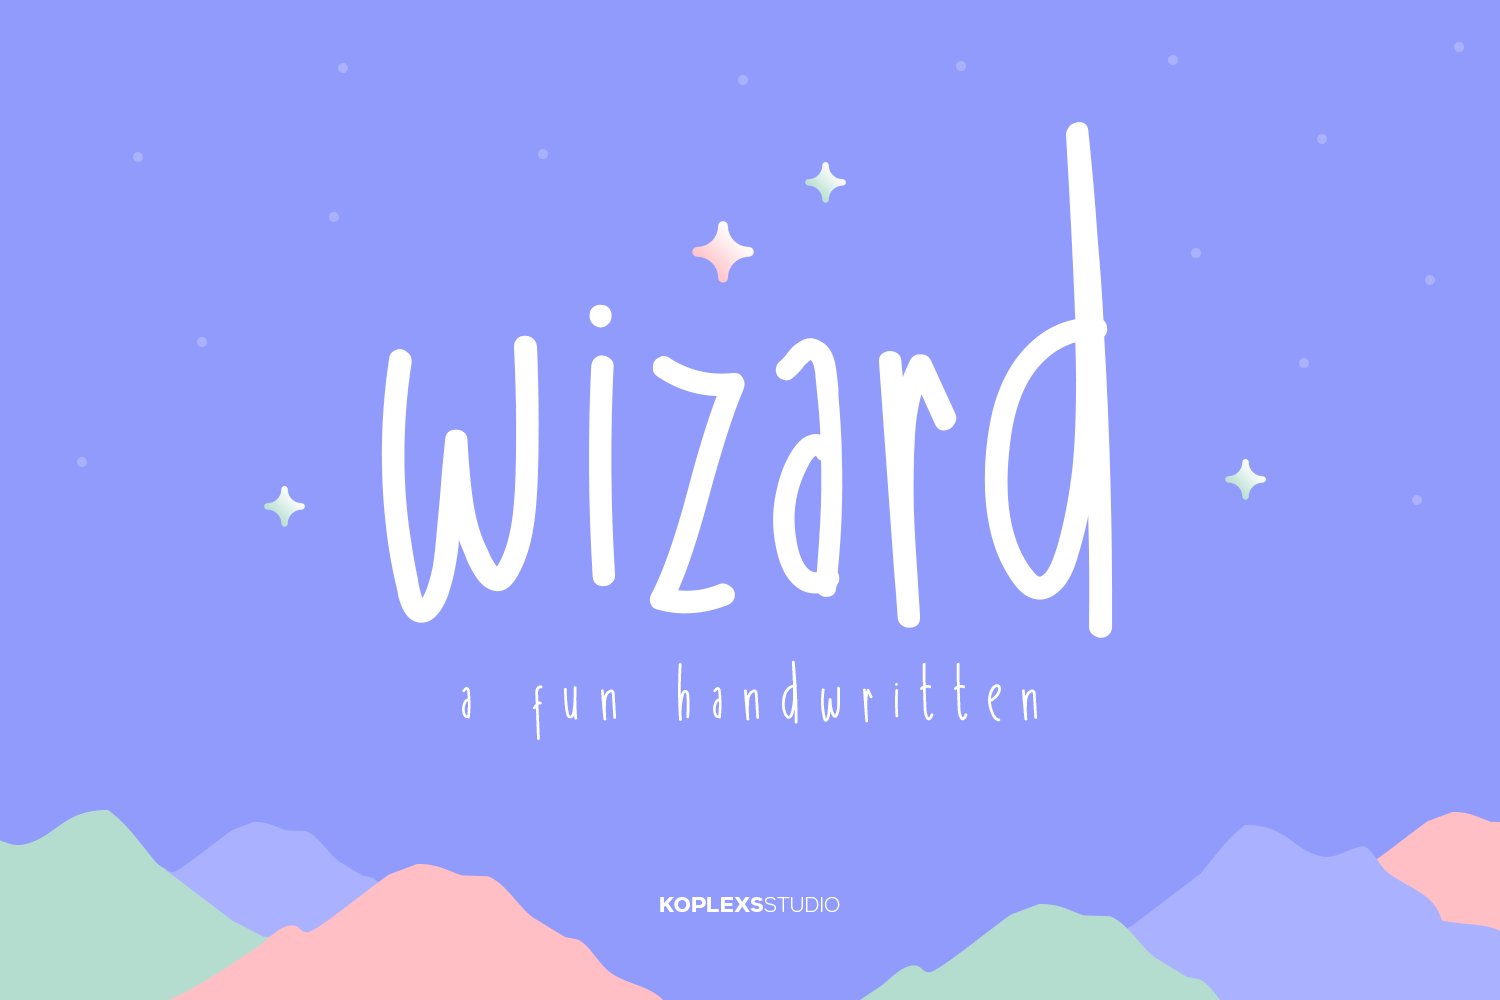 Wizard - A Fun Handwritten Font cover image.